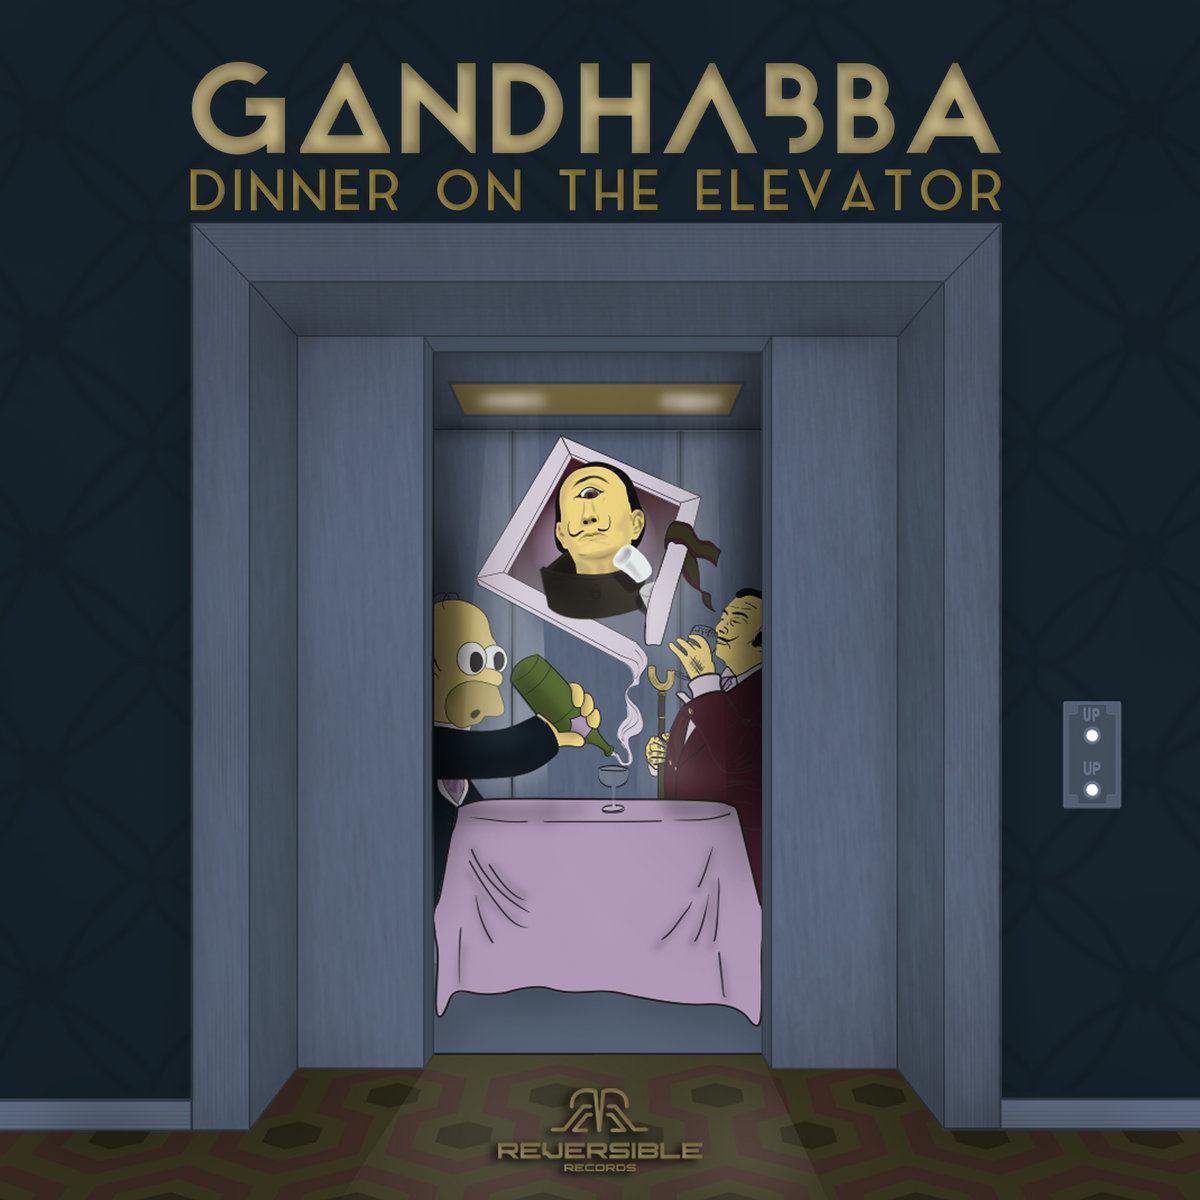 Dinner on the Elevator